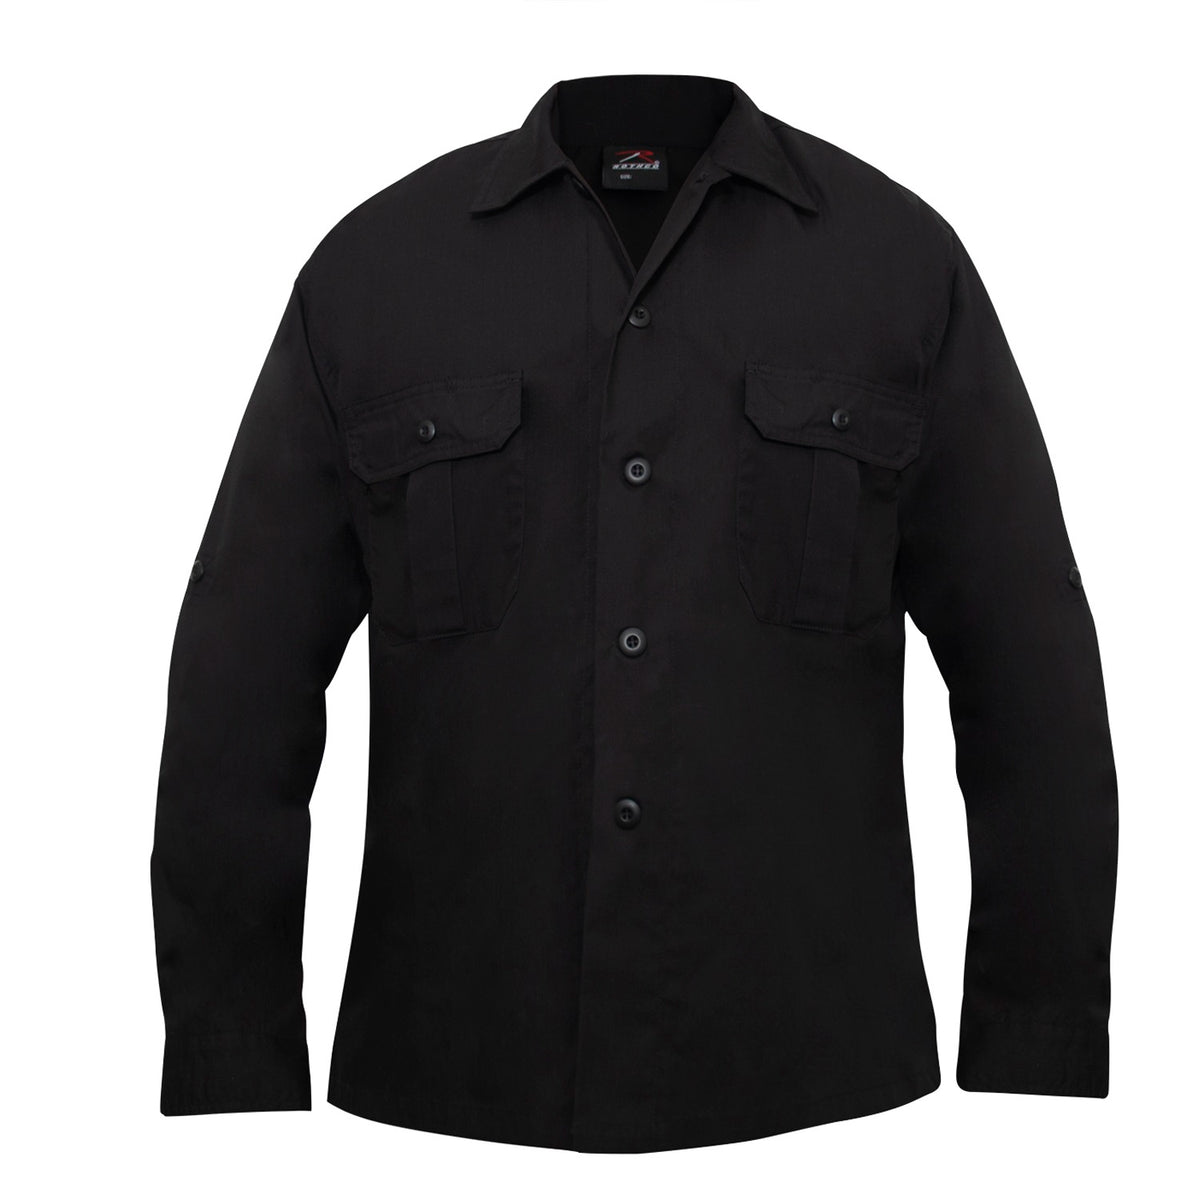 Rothco Lightweight Tactical Shirt Black